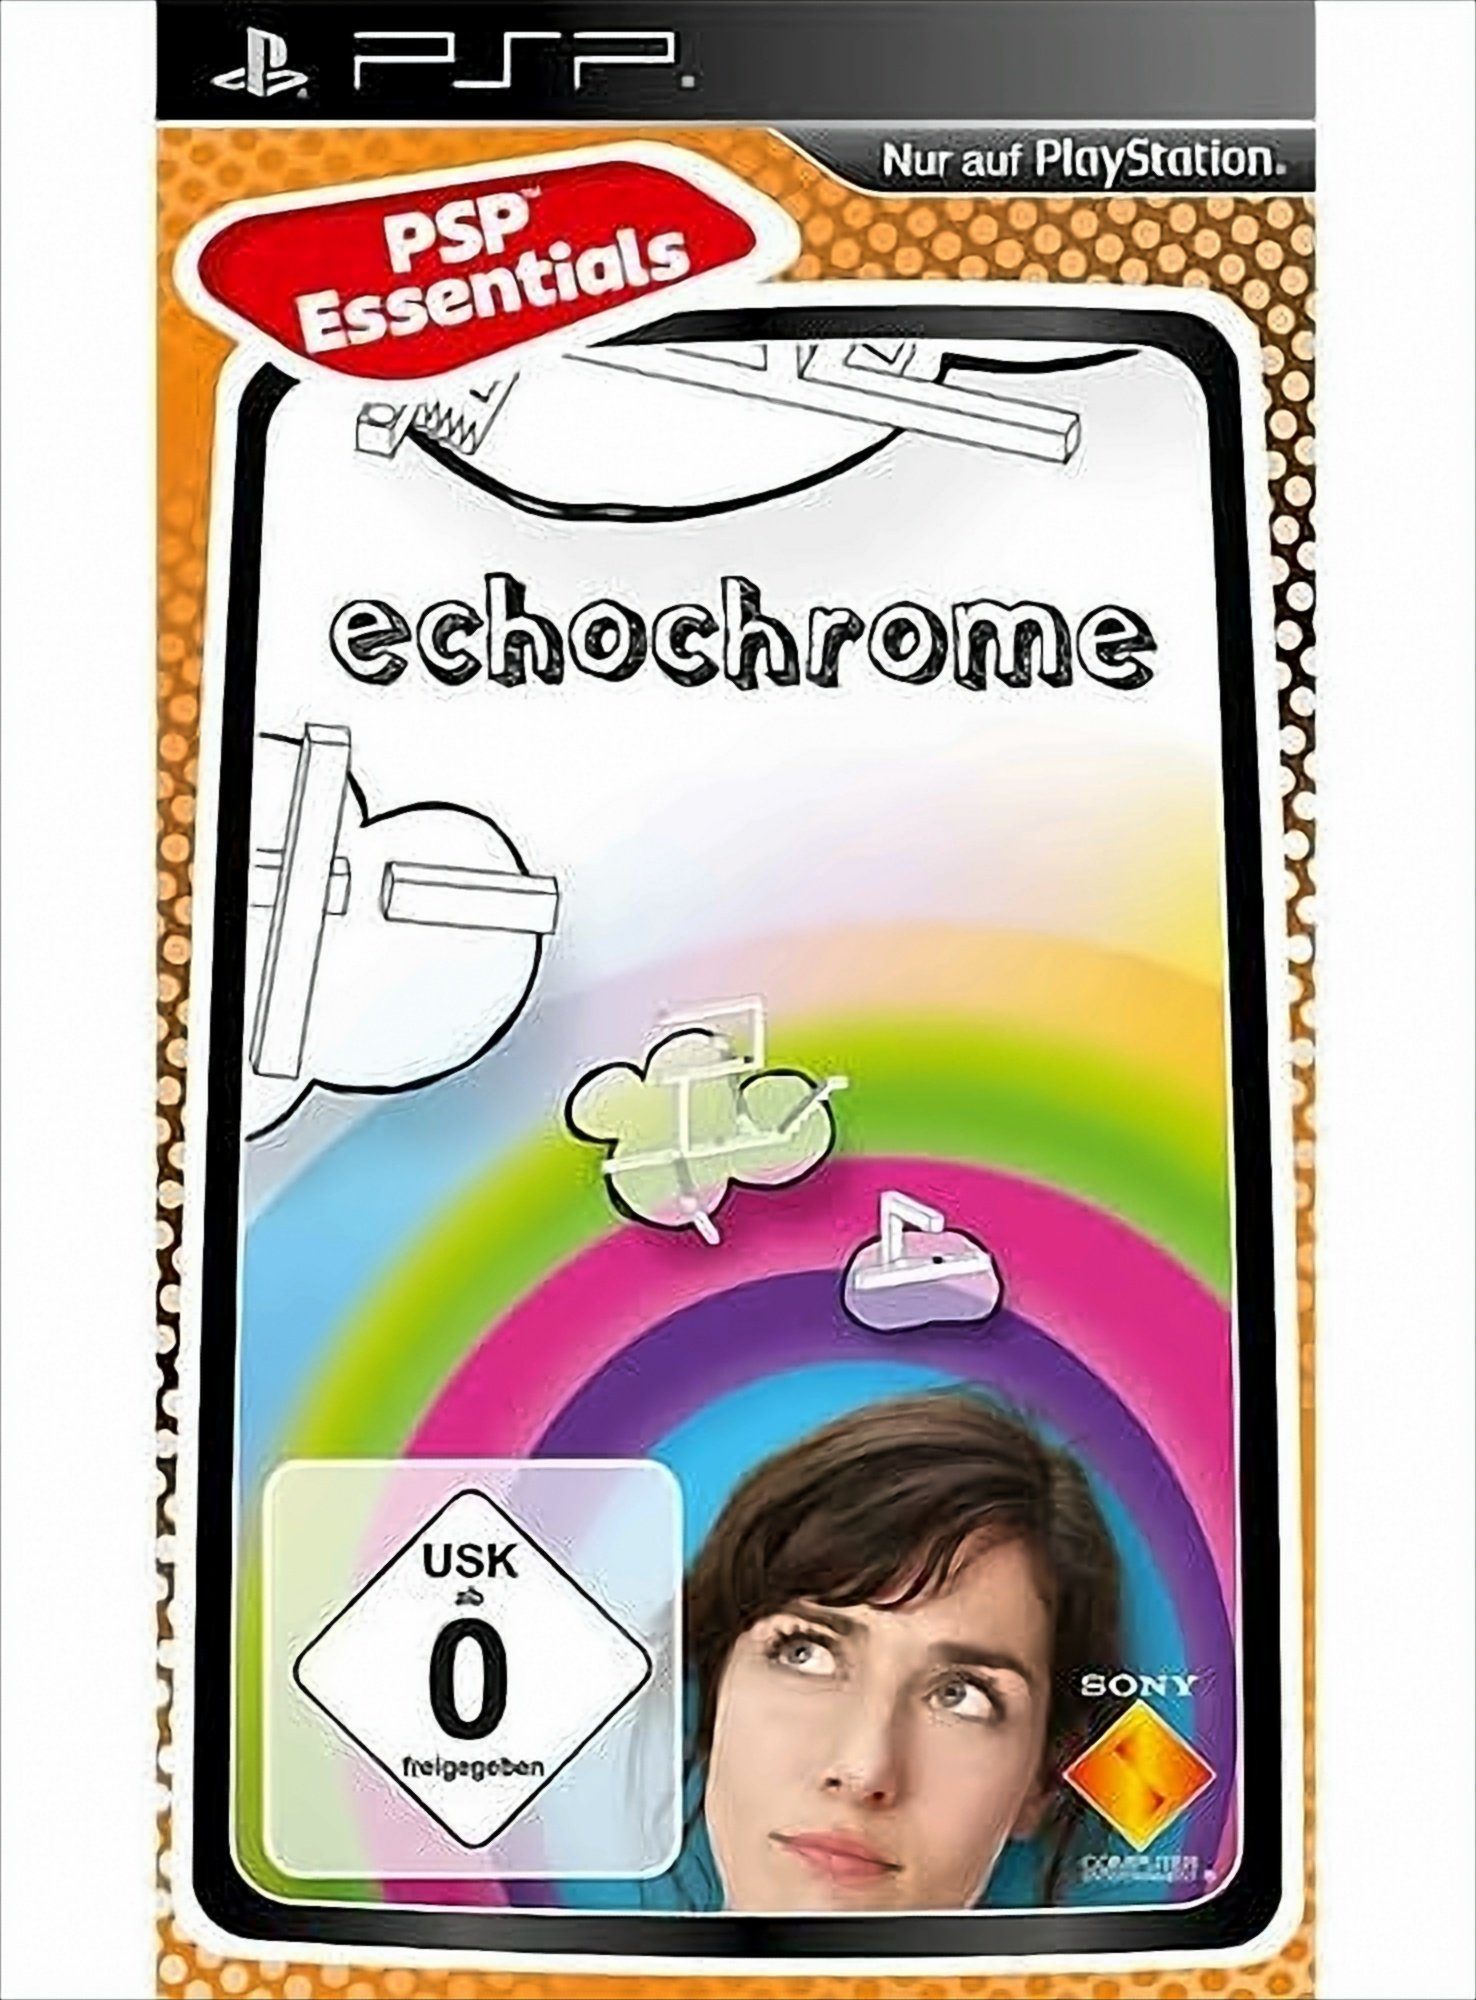 echochrome Playstation PSP